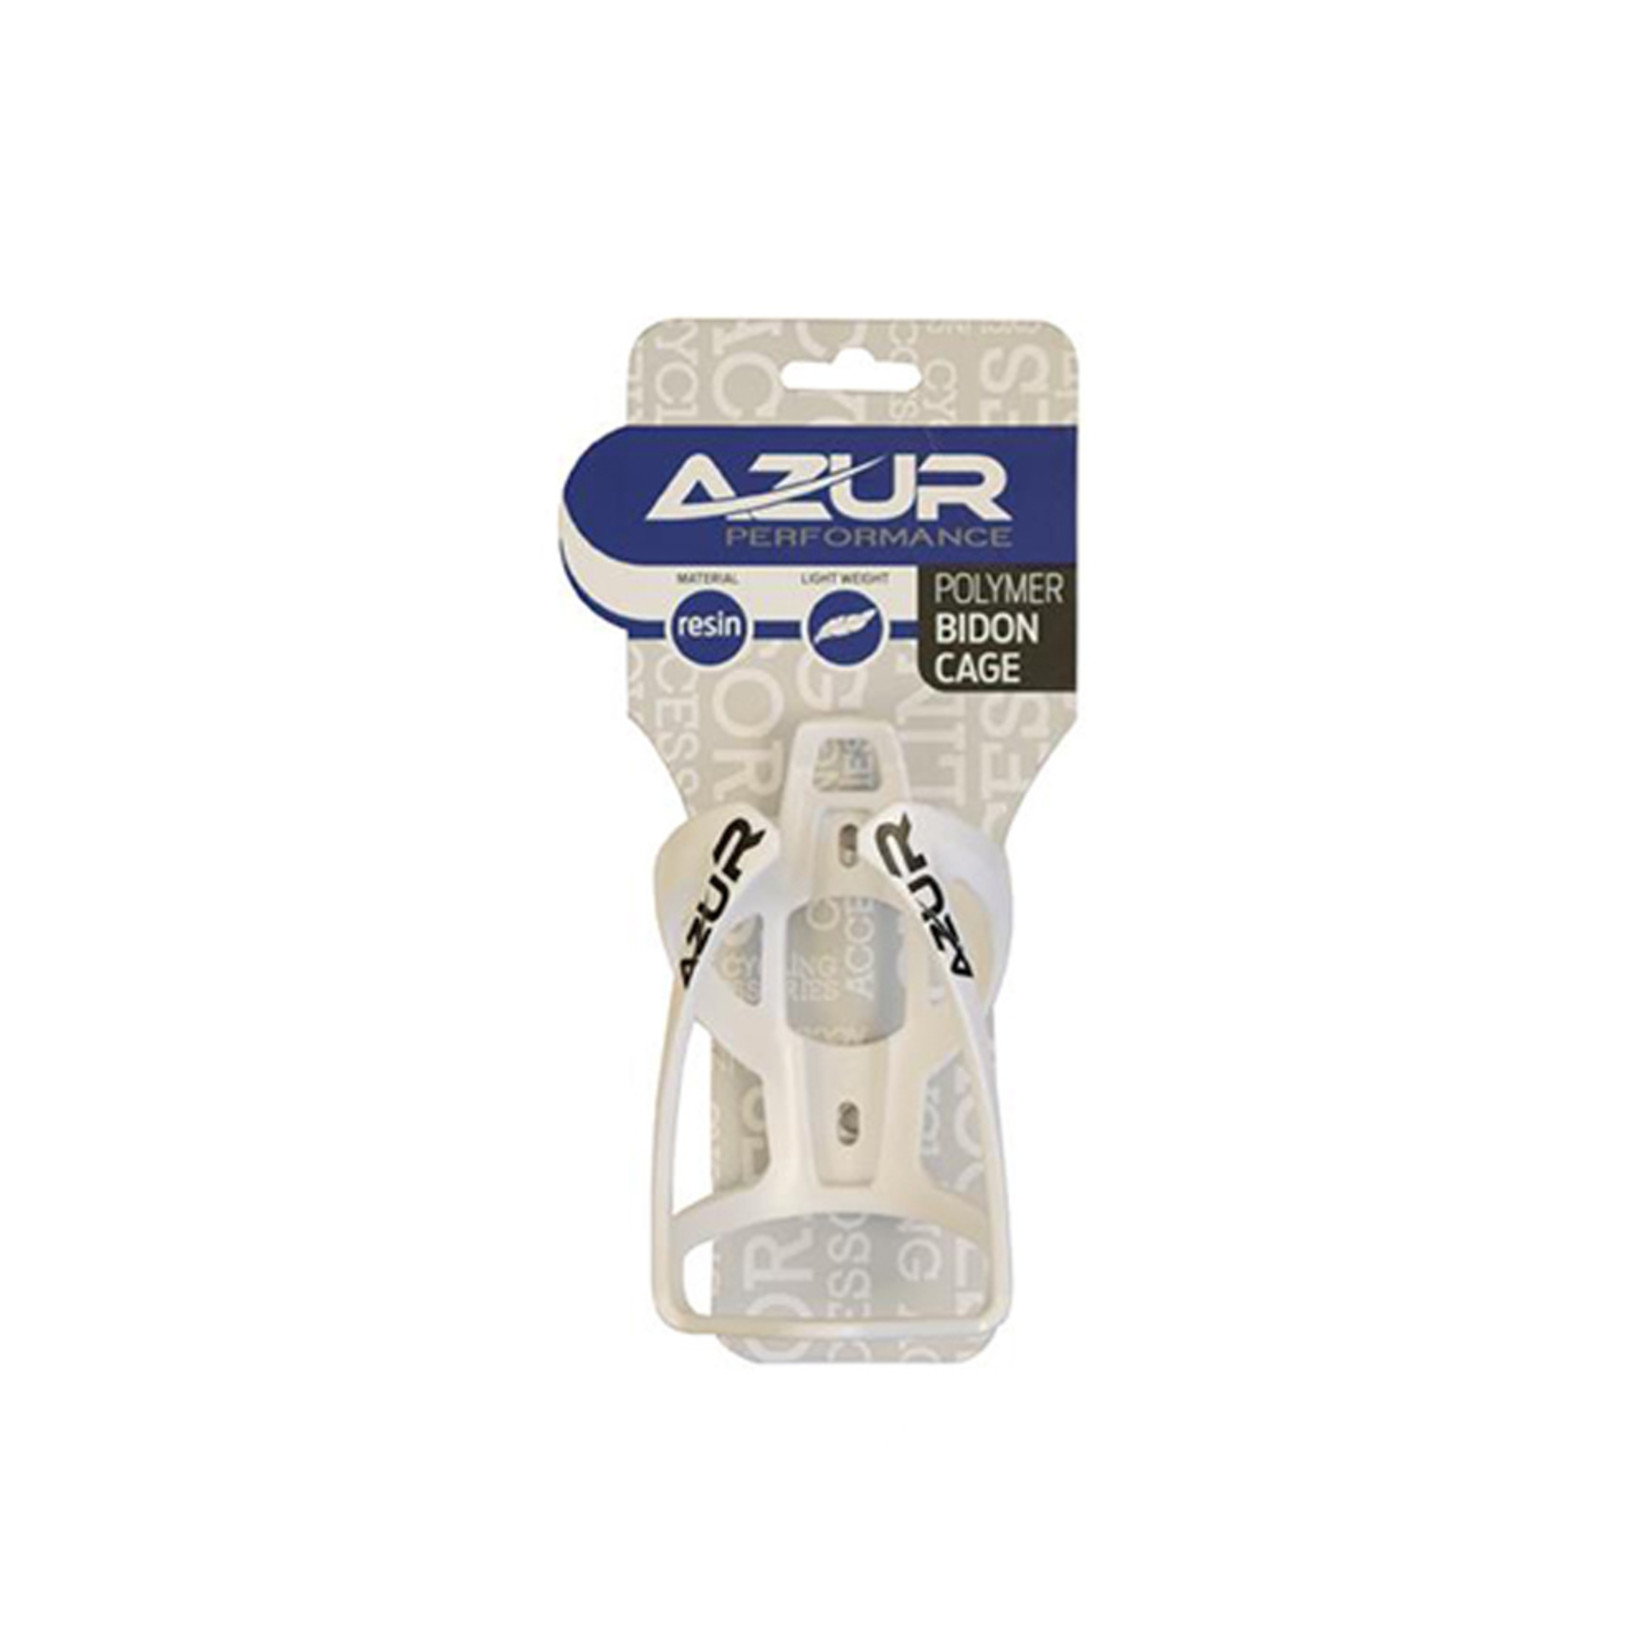 Azur Azur Bike/Cycling Bottle Cage - Lightweight - Resin - Plastic Bidon Cage - White